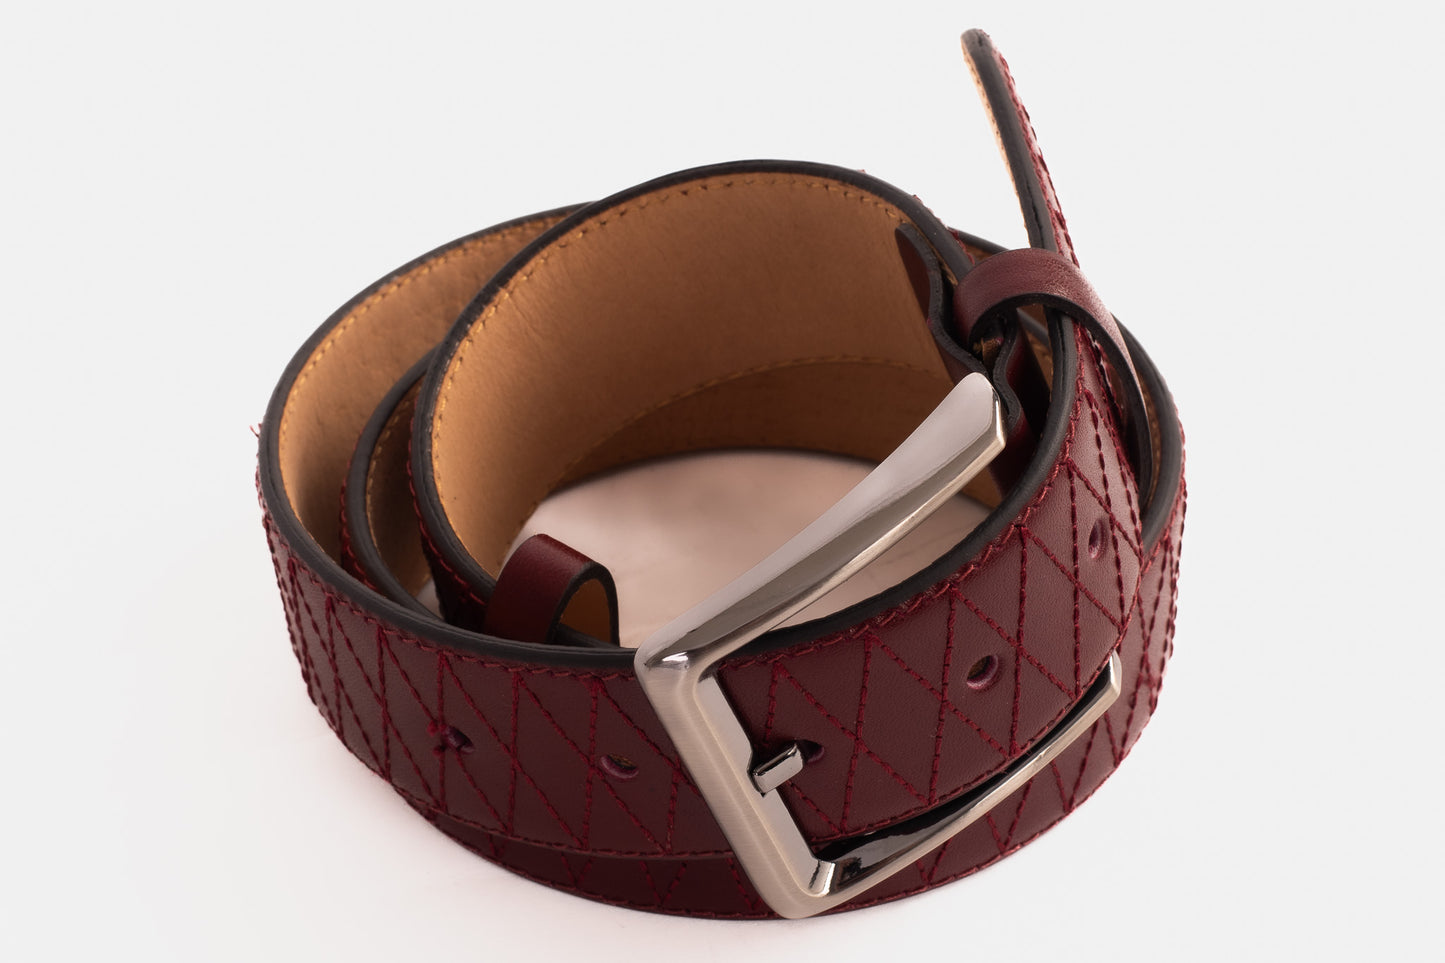 The Adler Burgundy Leather Belt